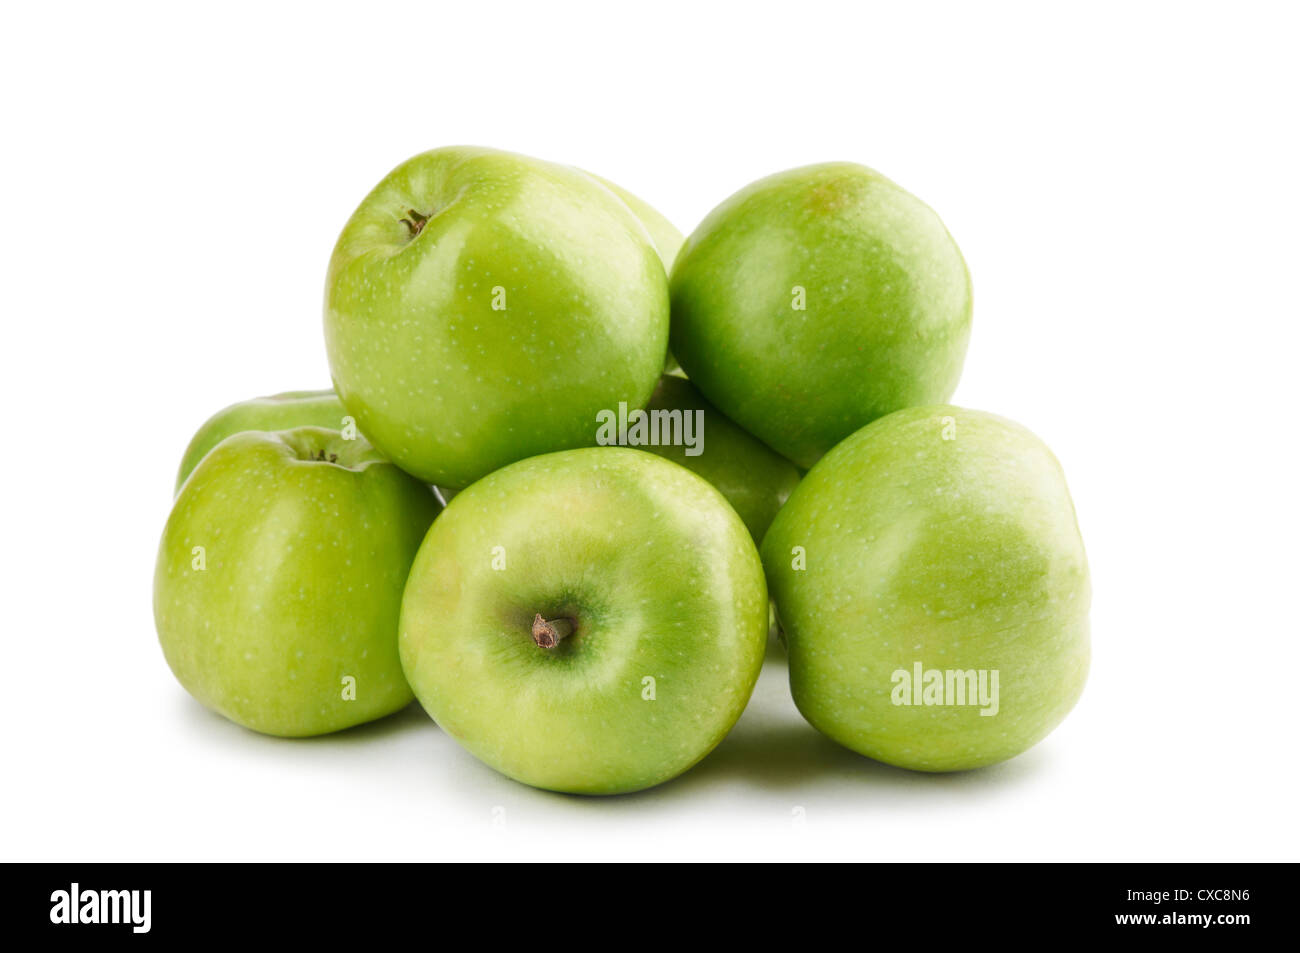 https://c8.alamy.com/comp/CXC8N6/green-apples-isolated-on-a-white-background-CXC8N6.jpg